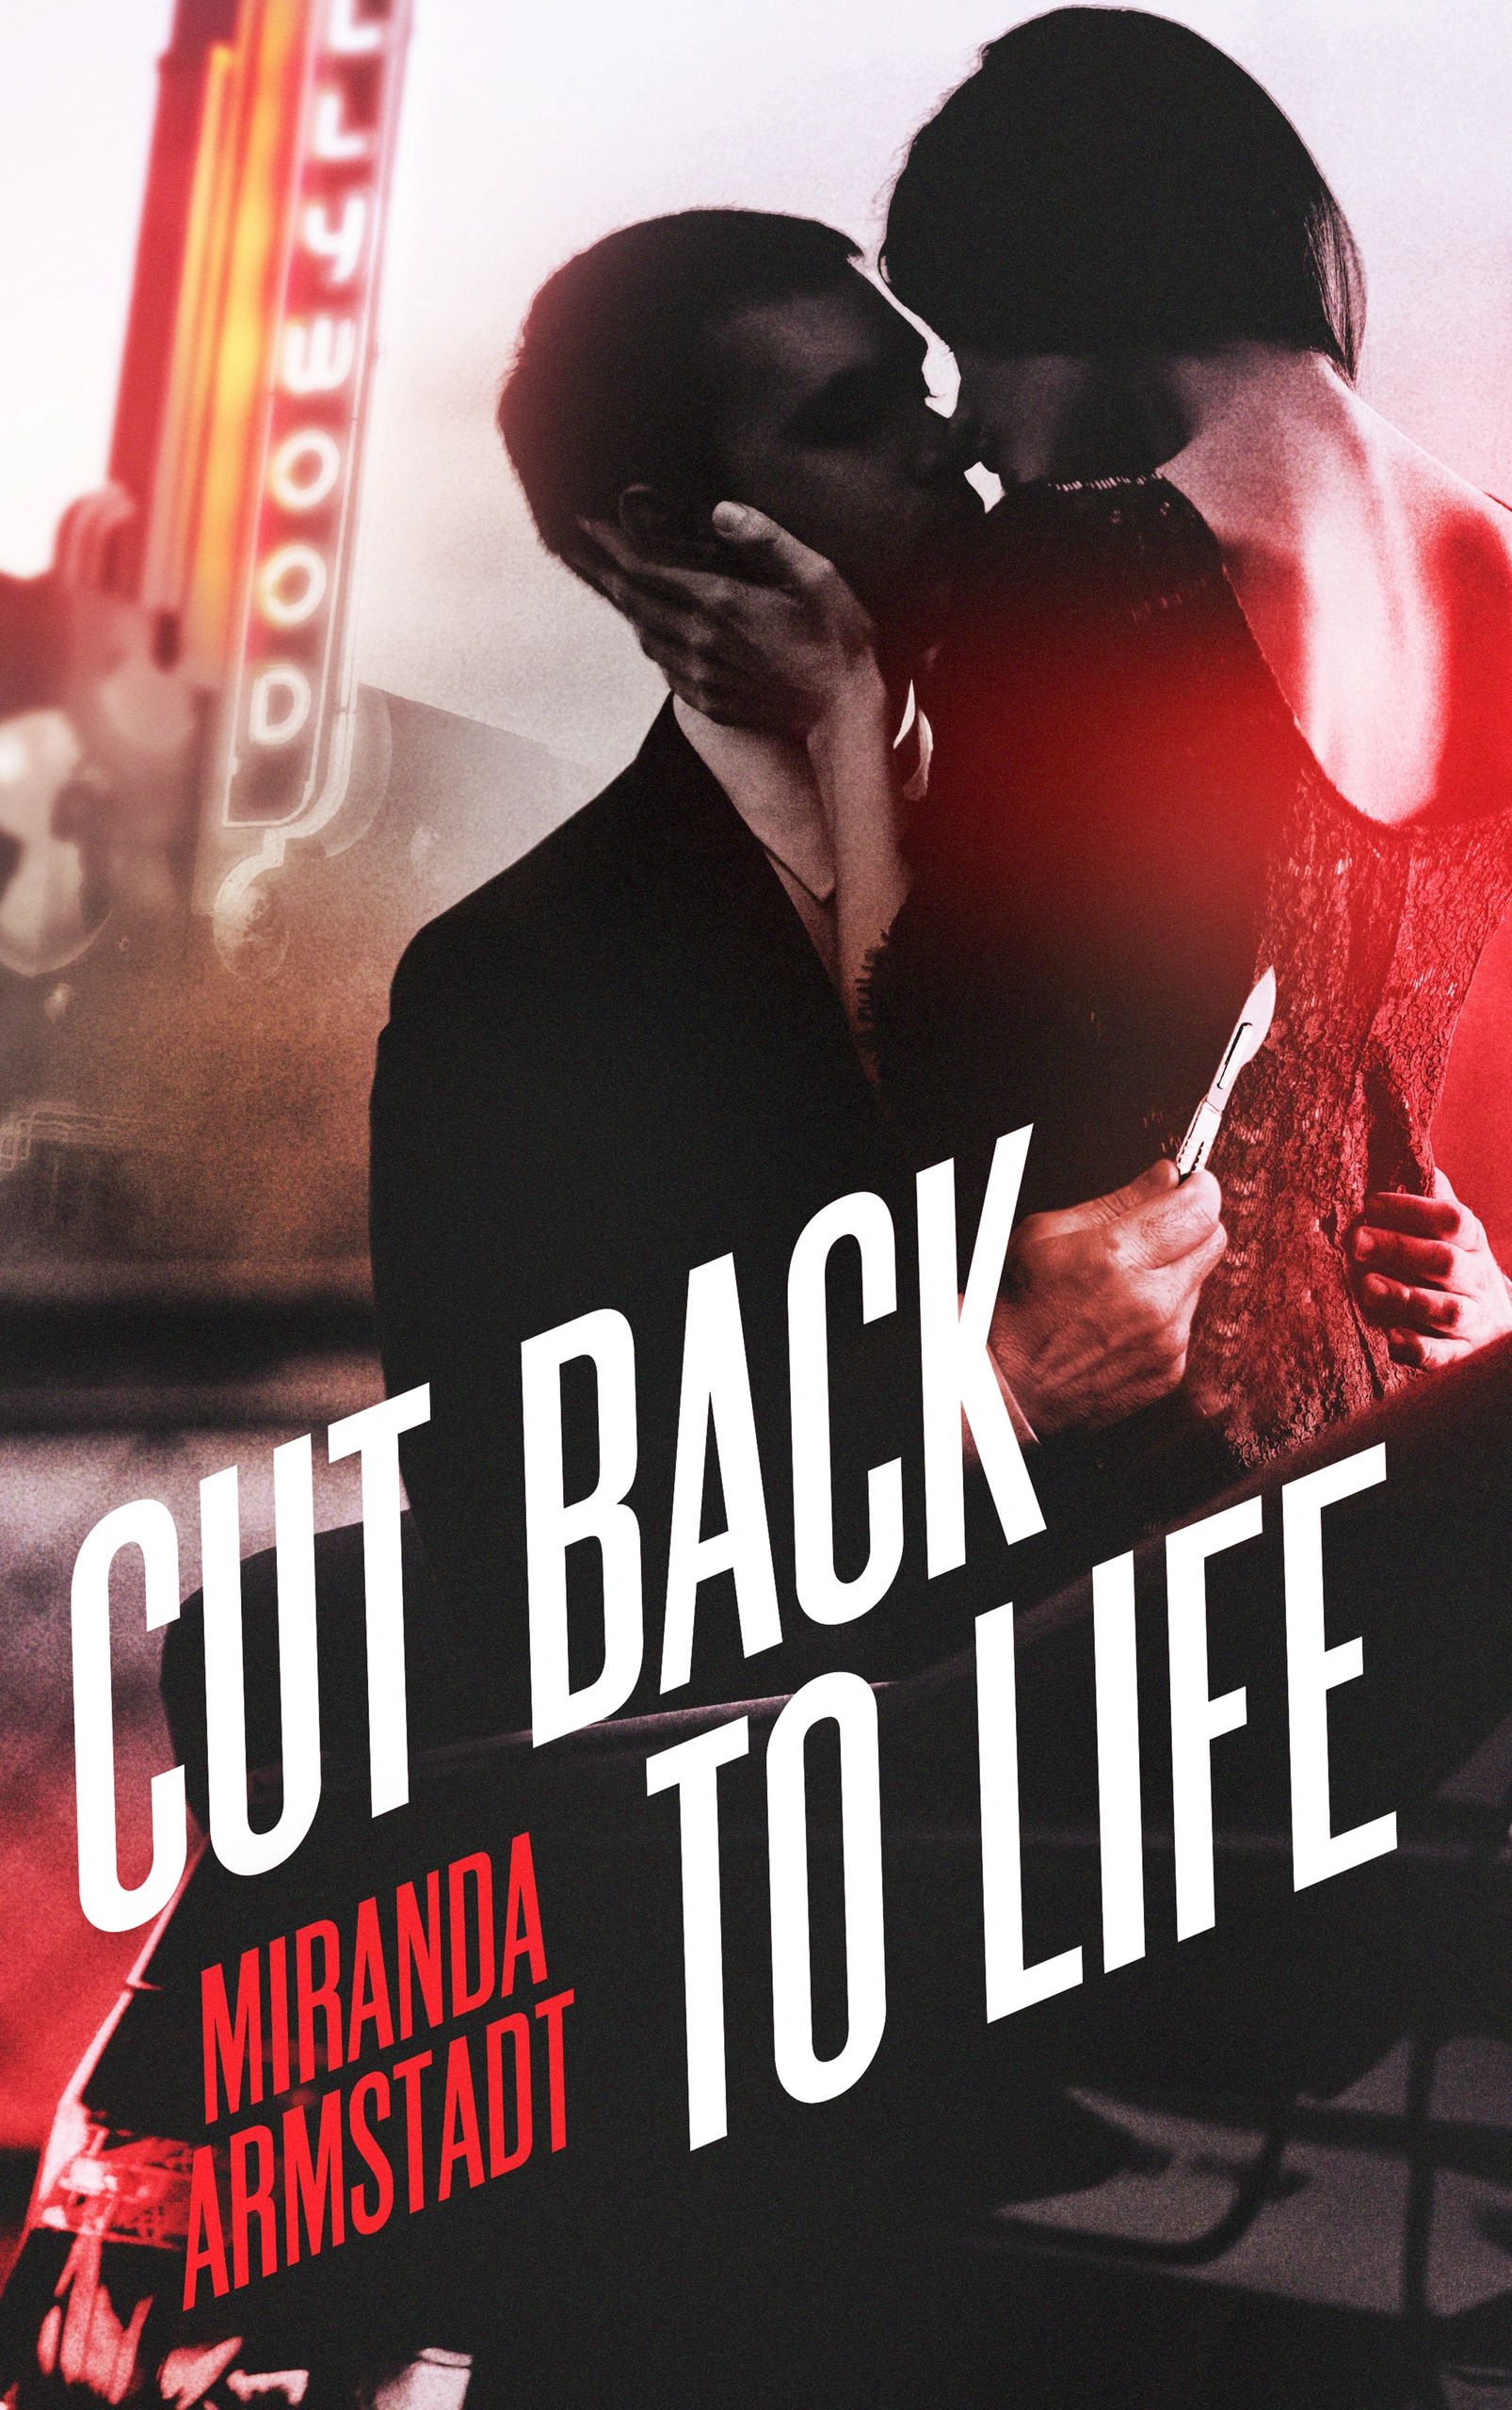 "Cut Back to Life" Romantic Suspense Novel by Miranda Armstadt